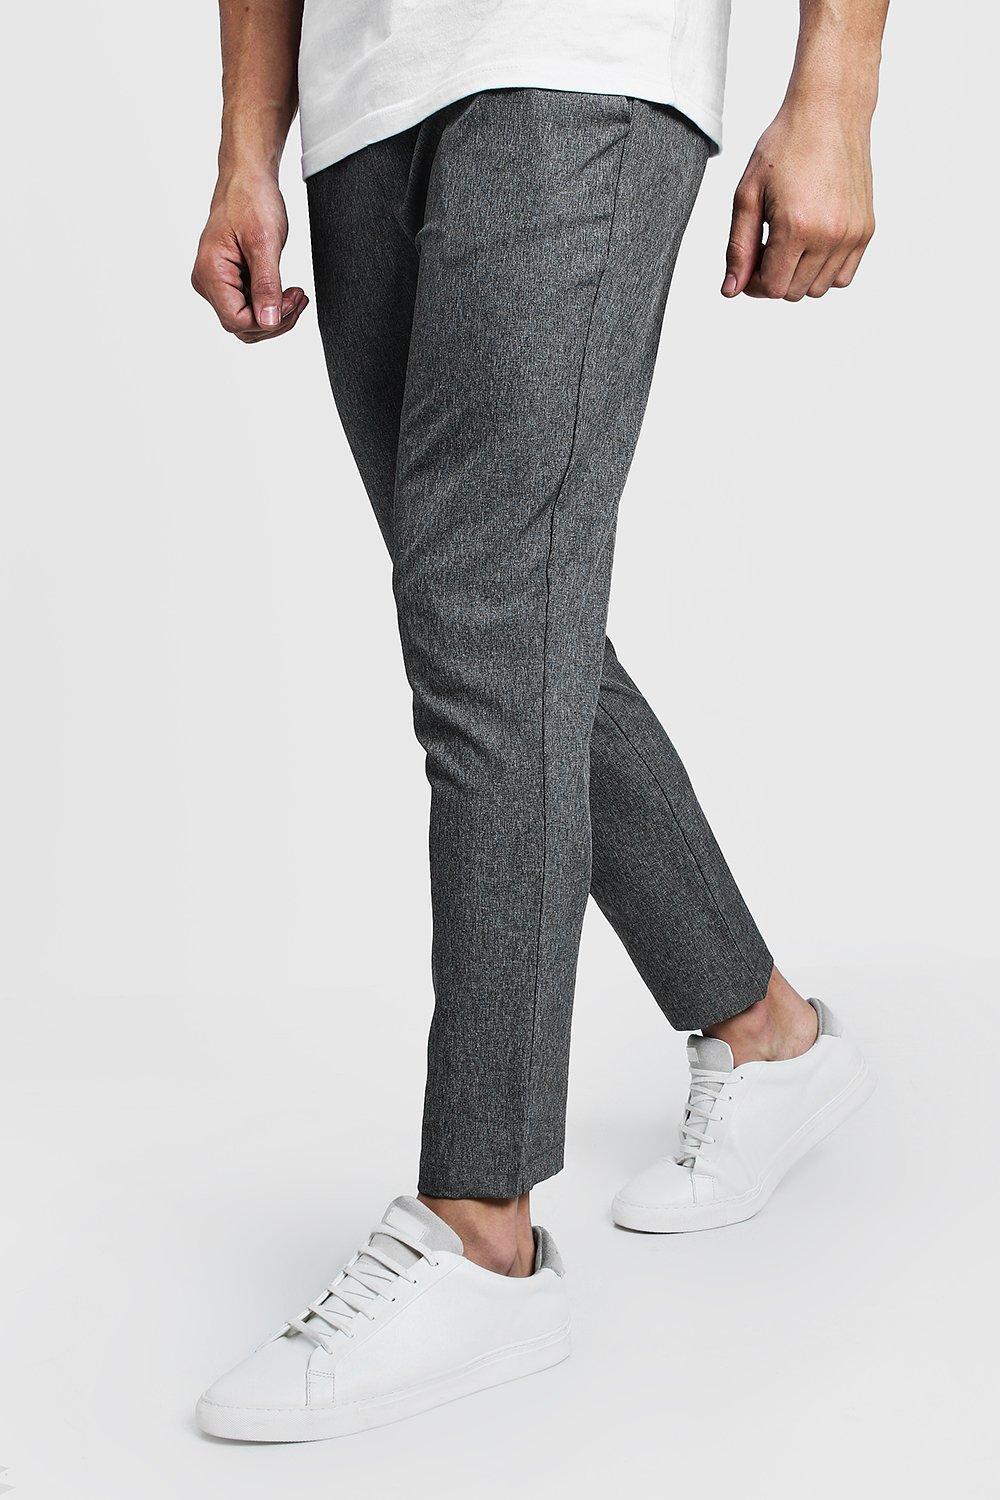 Lyst - BoohooMAN Plain Smart Jogger Trouser in Gray for Men